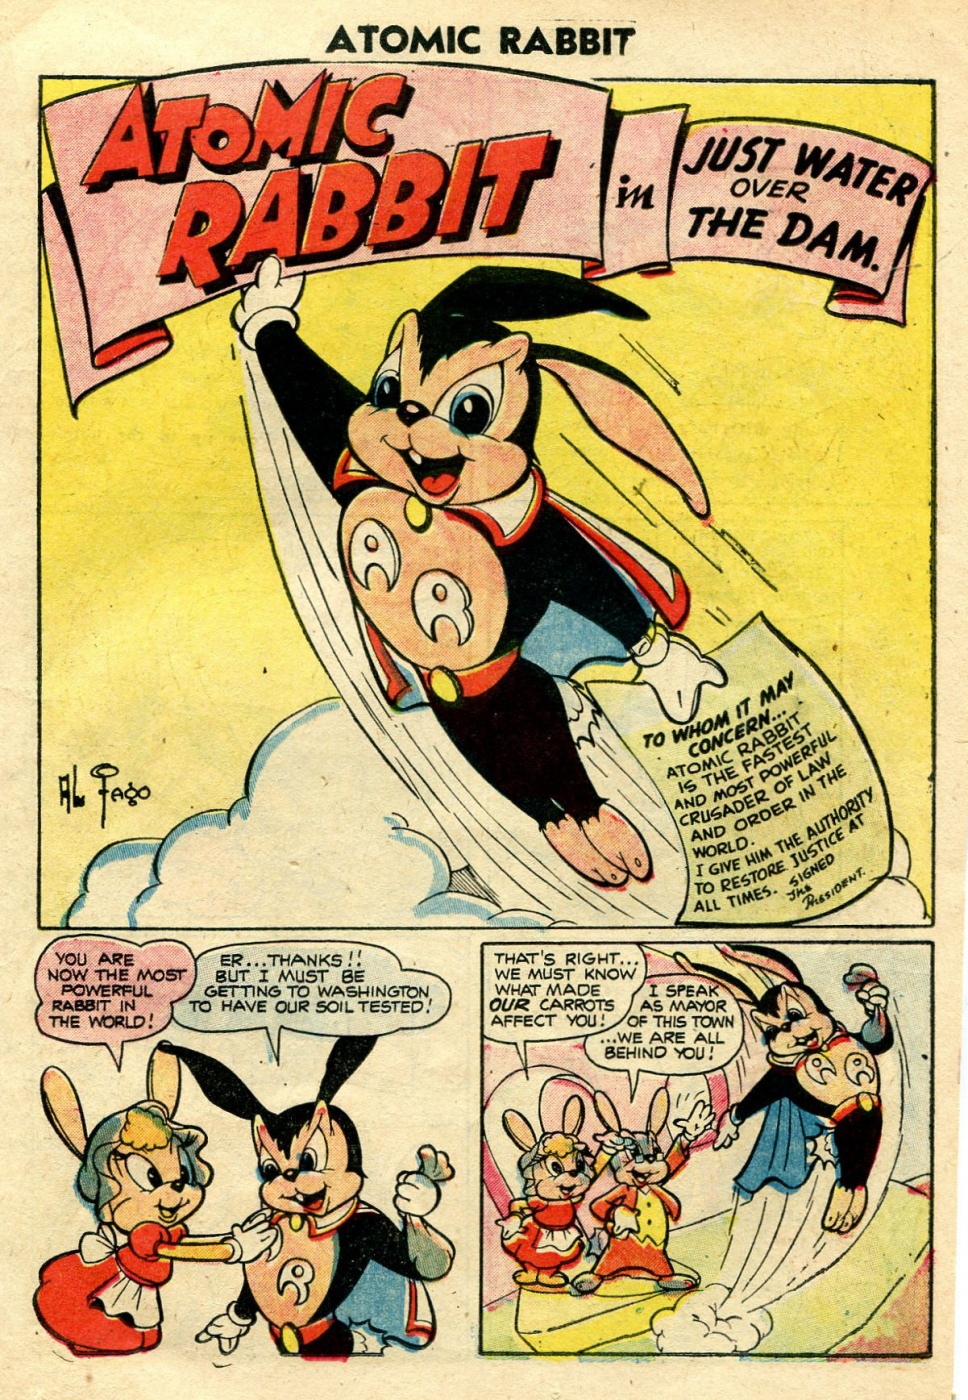 Atomic Rabbit Comics (19)